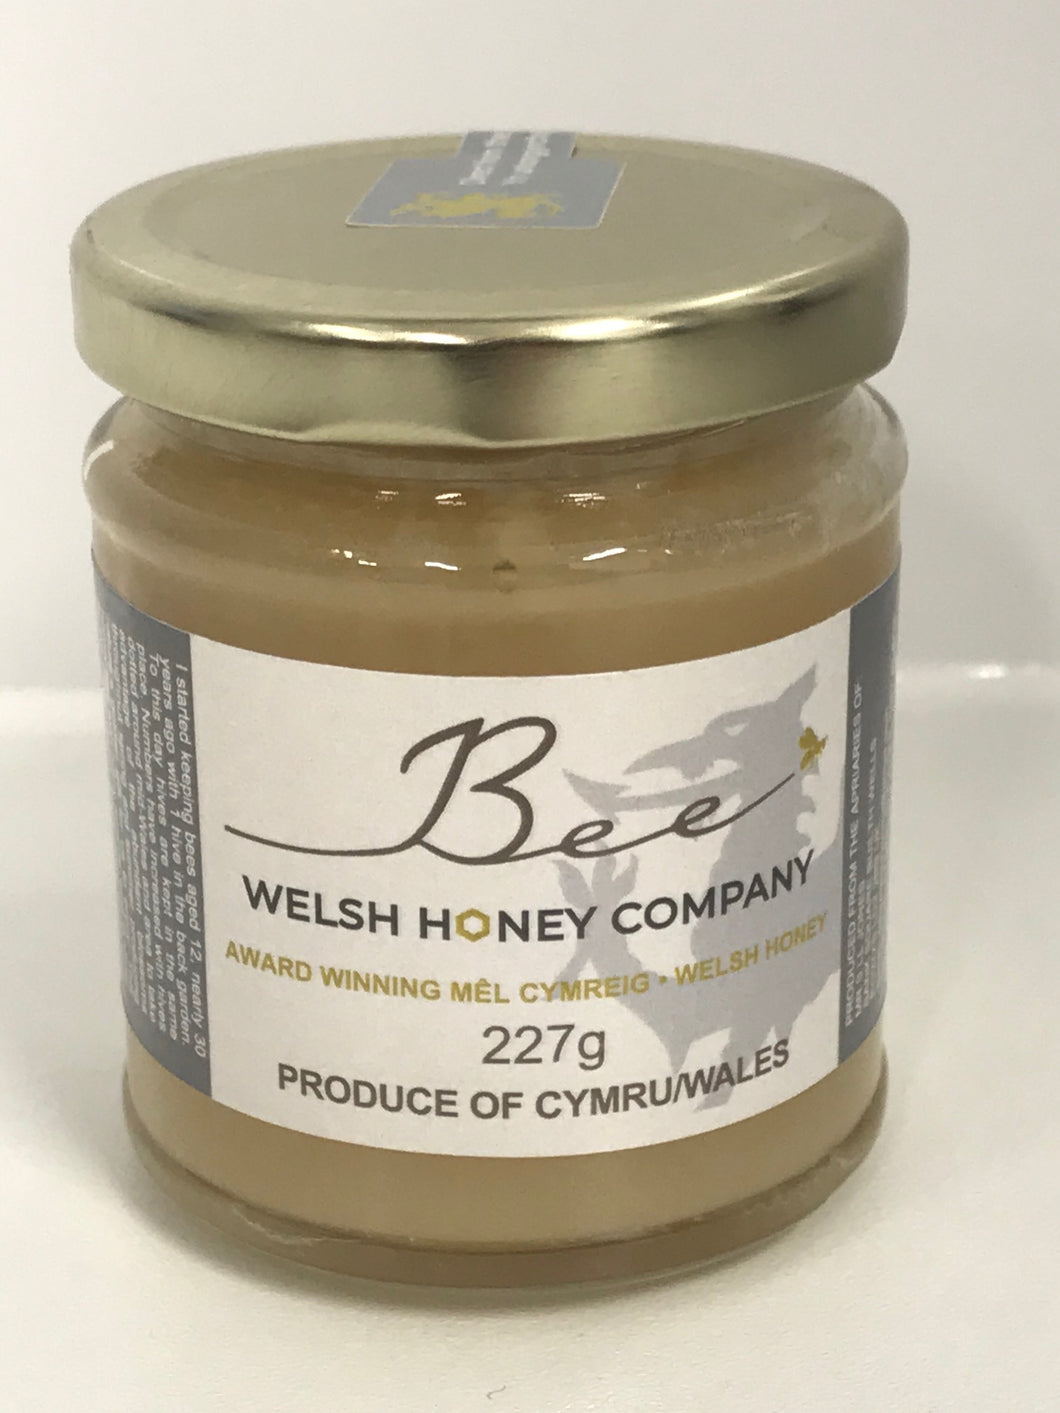  Raw Honey Wales | Lime Blossom Honey | UK Food Gift | Bee Welsh Honey Company | Beeswax Block UK | Gourmet Foods Online |